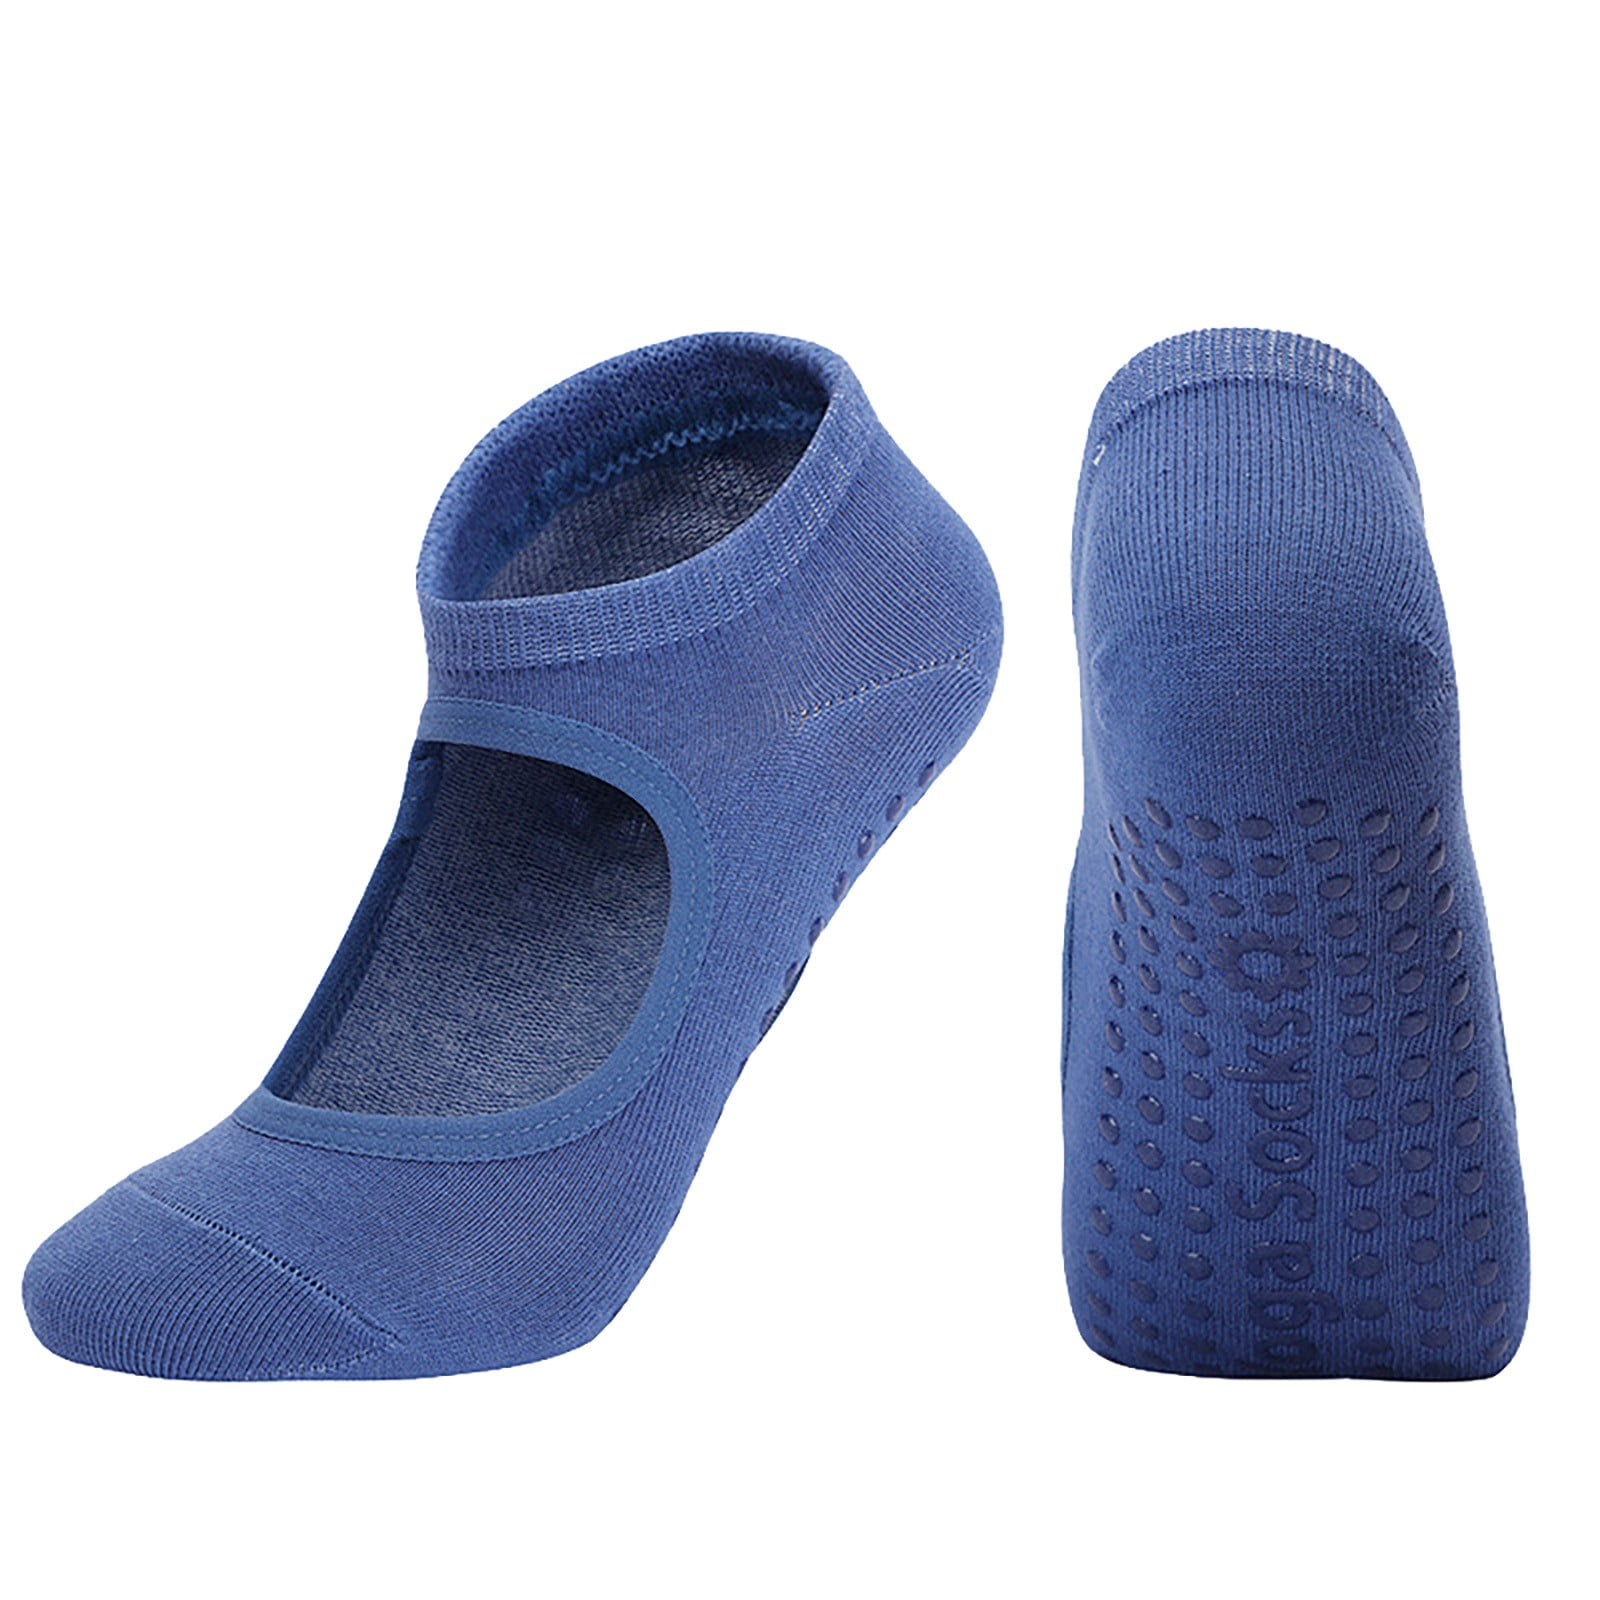 Wozhidaoke Socks For Women Grip Socks Ladies' Solid Color Backless Yoga  Ankle Sports Pilates Socks Wine